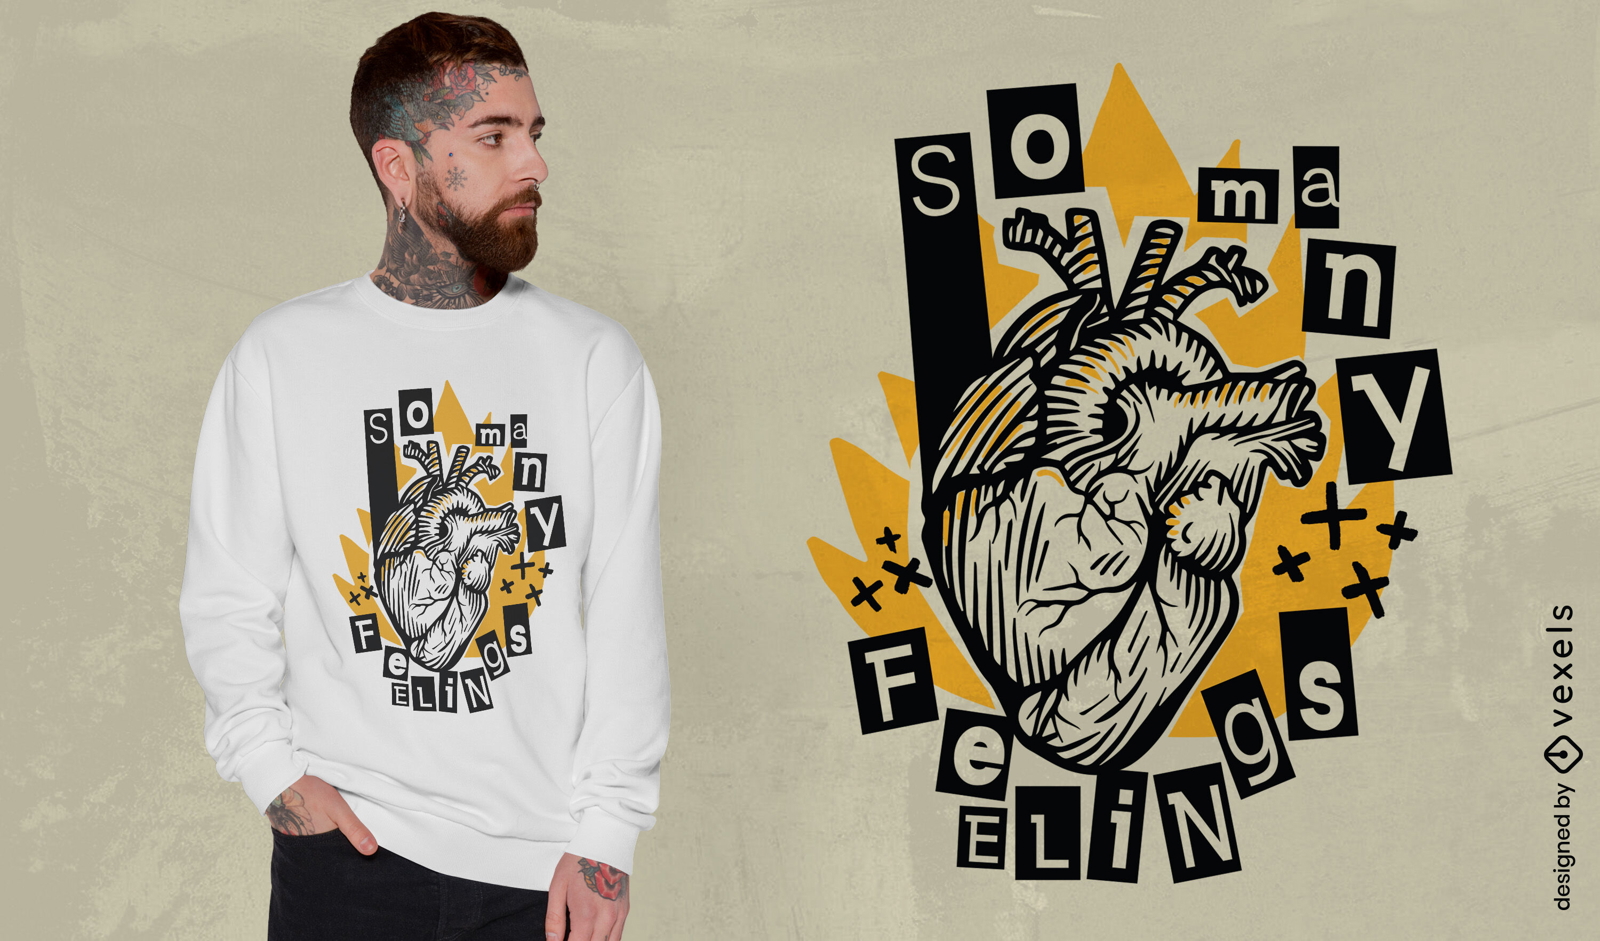 Anatomical heart collage t-shirt design